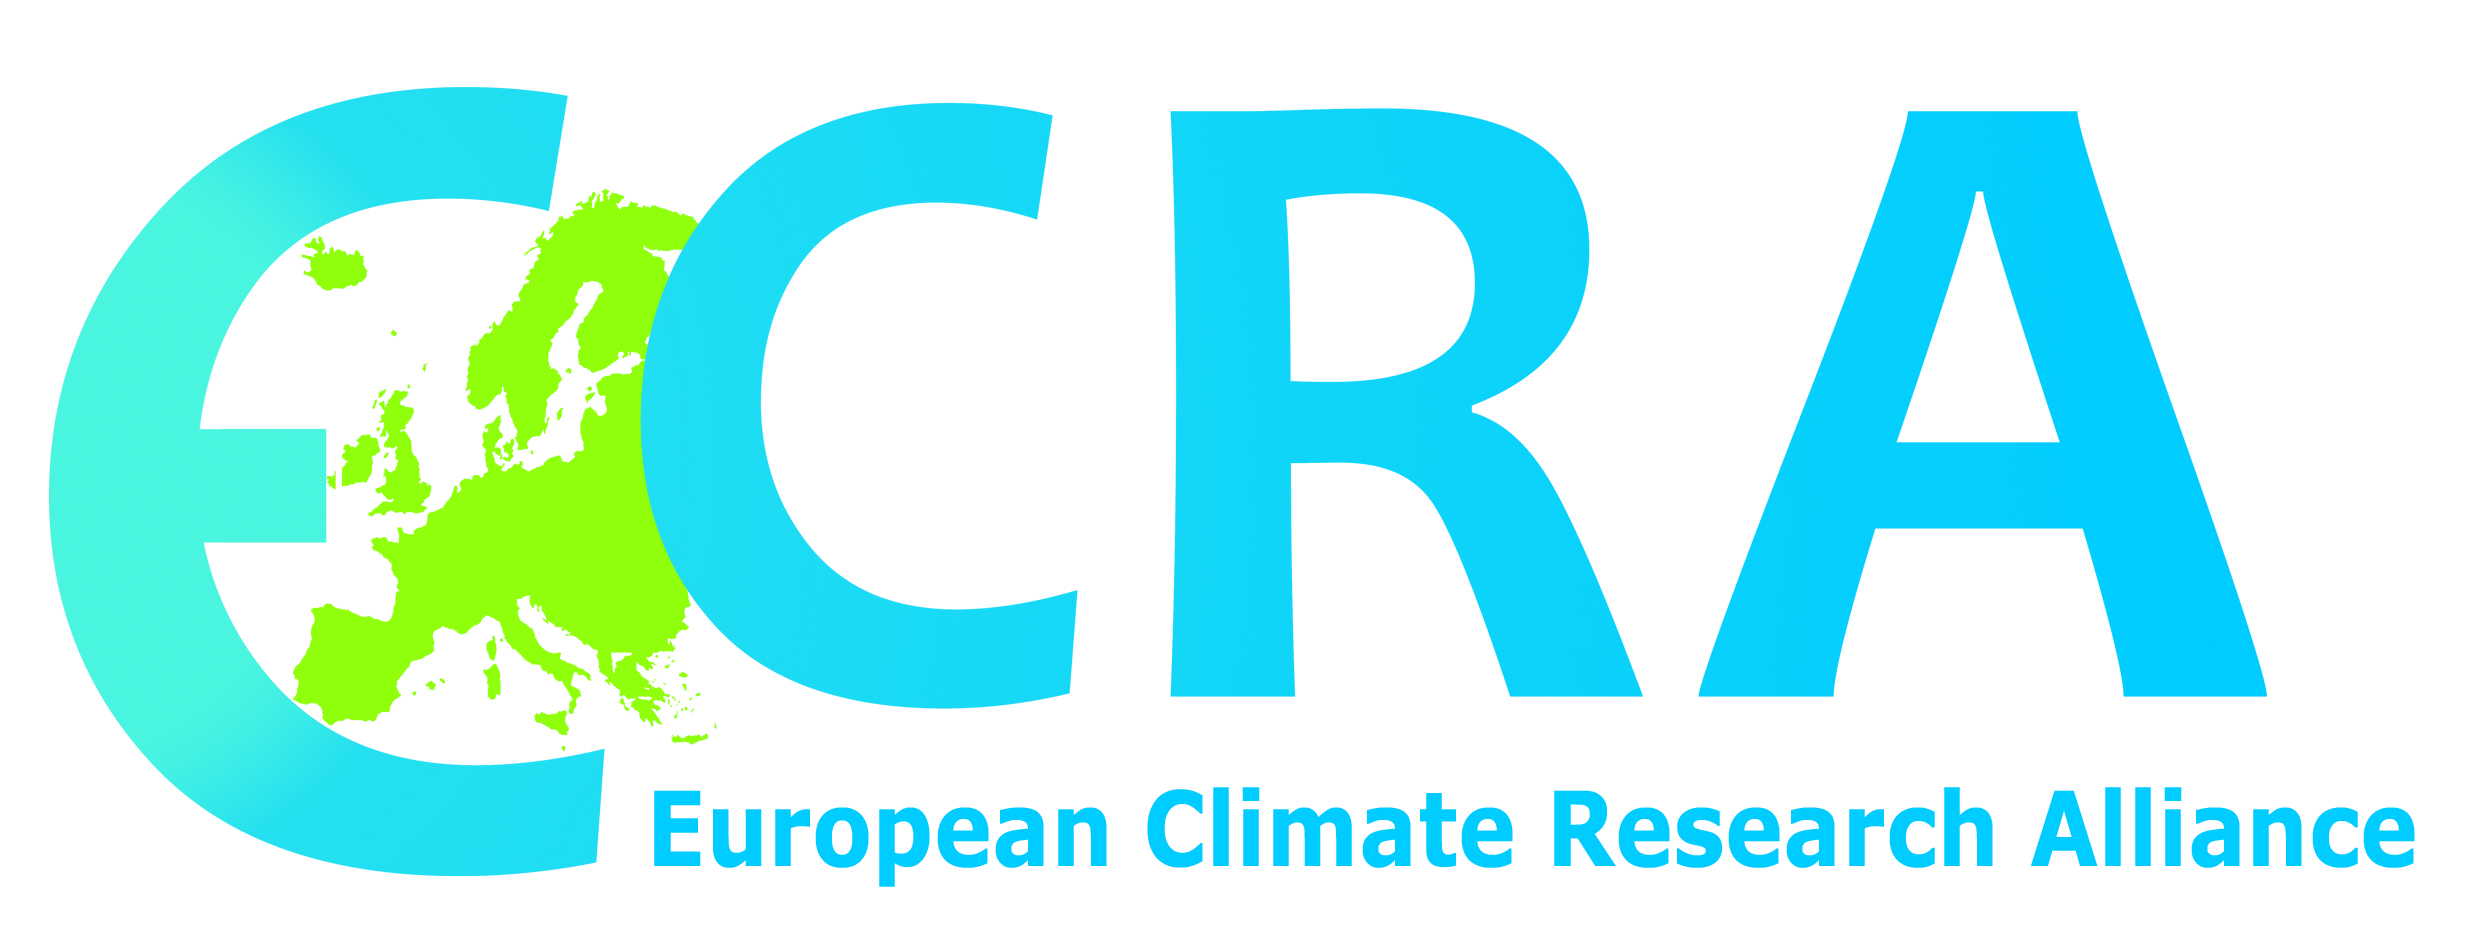 European Climate Research Alliance